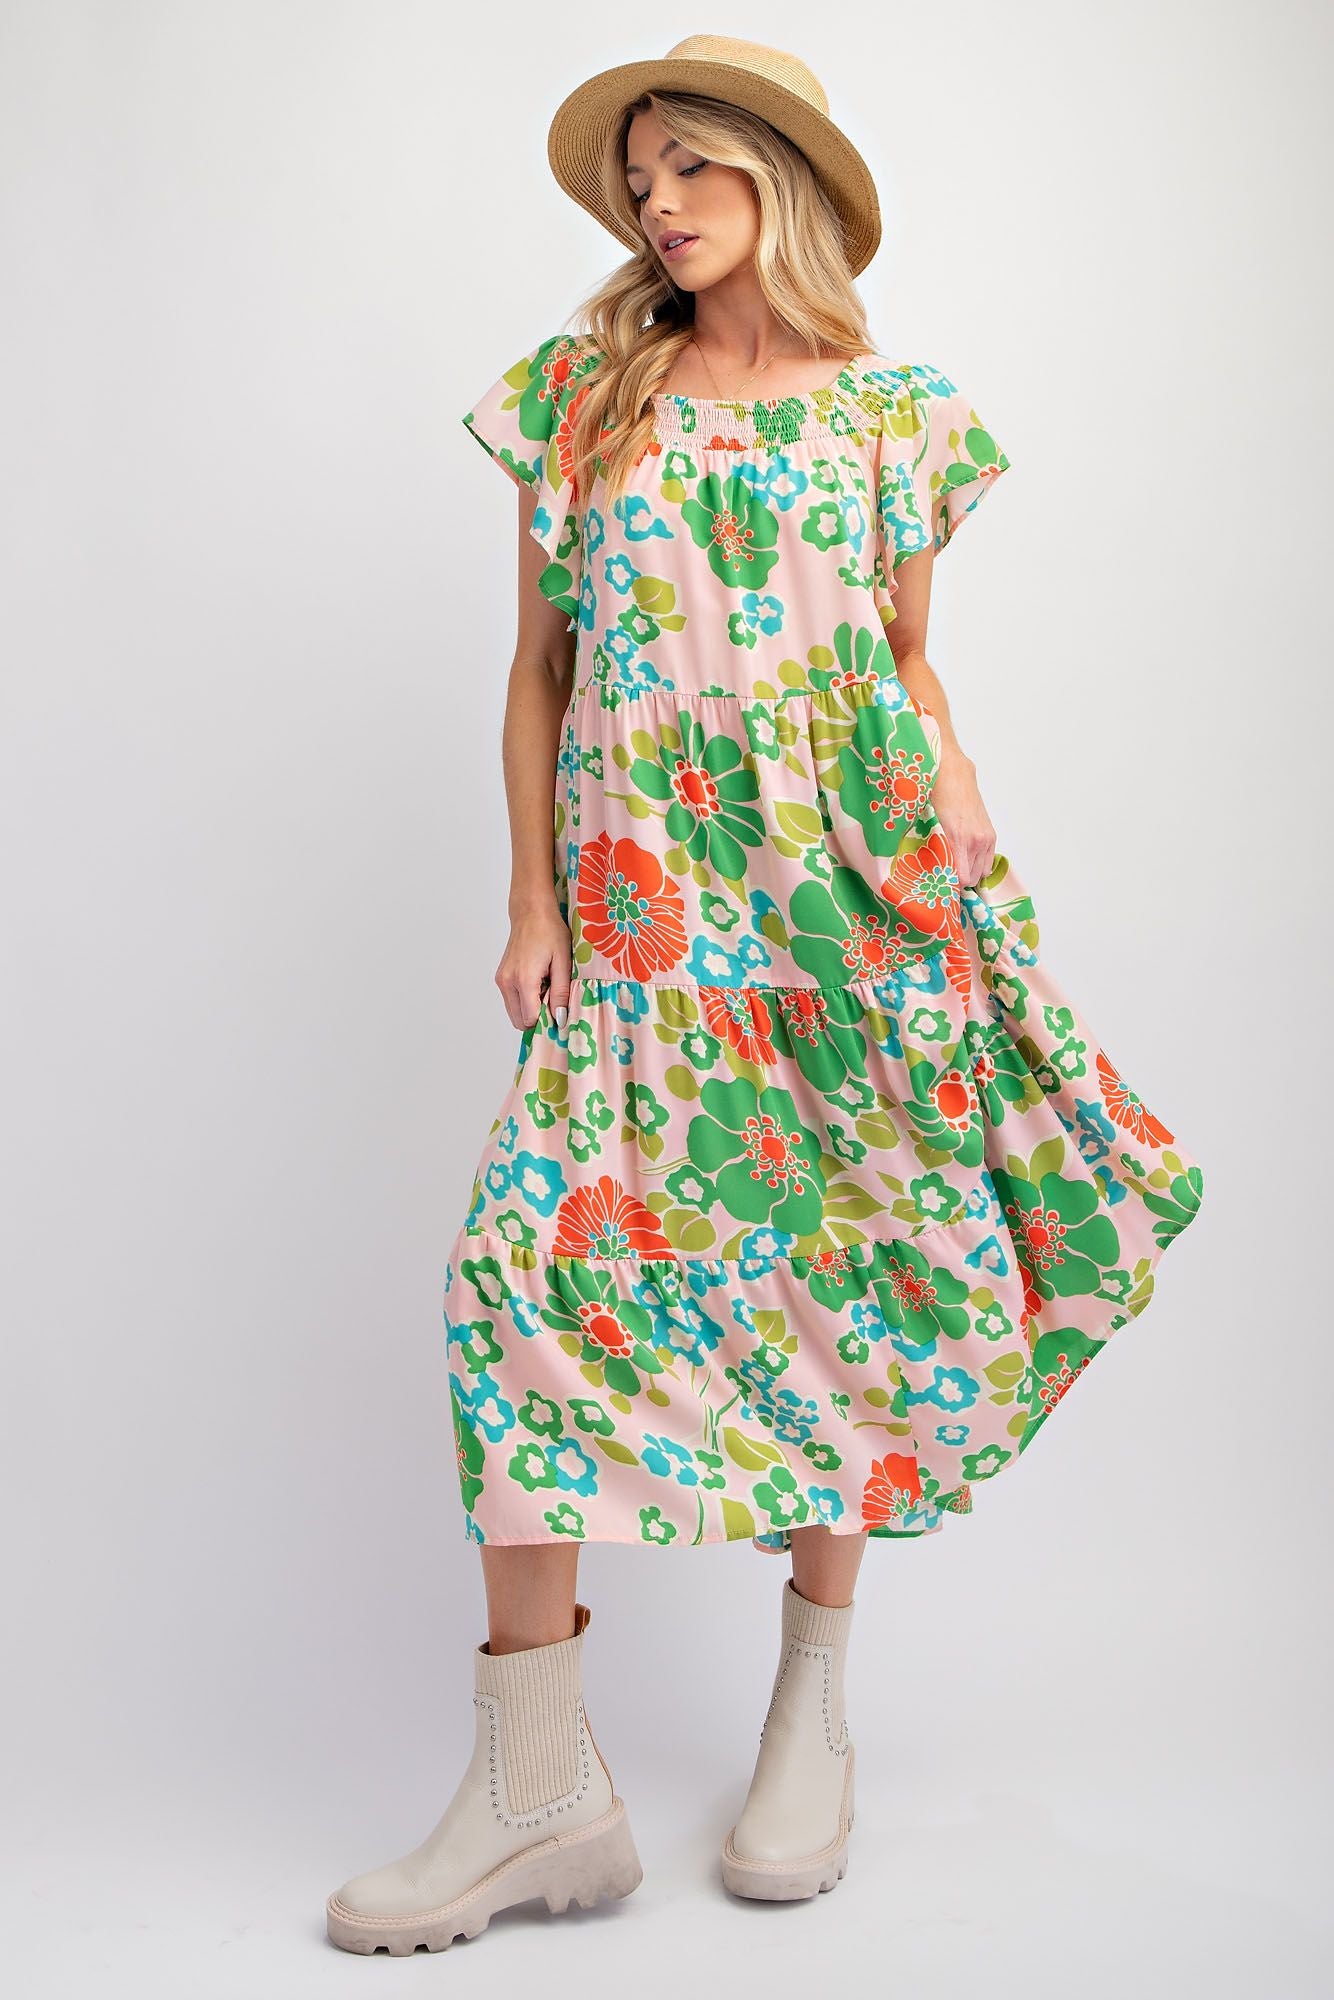 Breanne Floral Maxi Dress